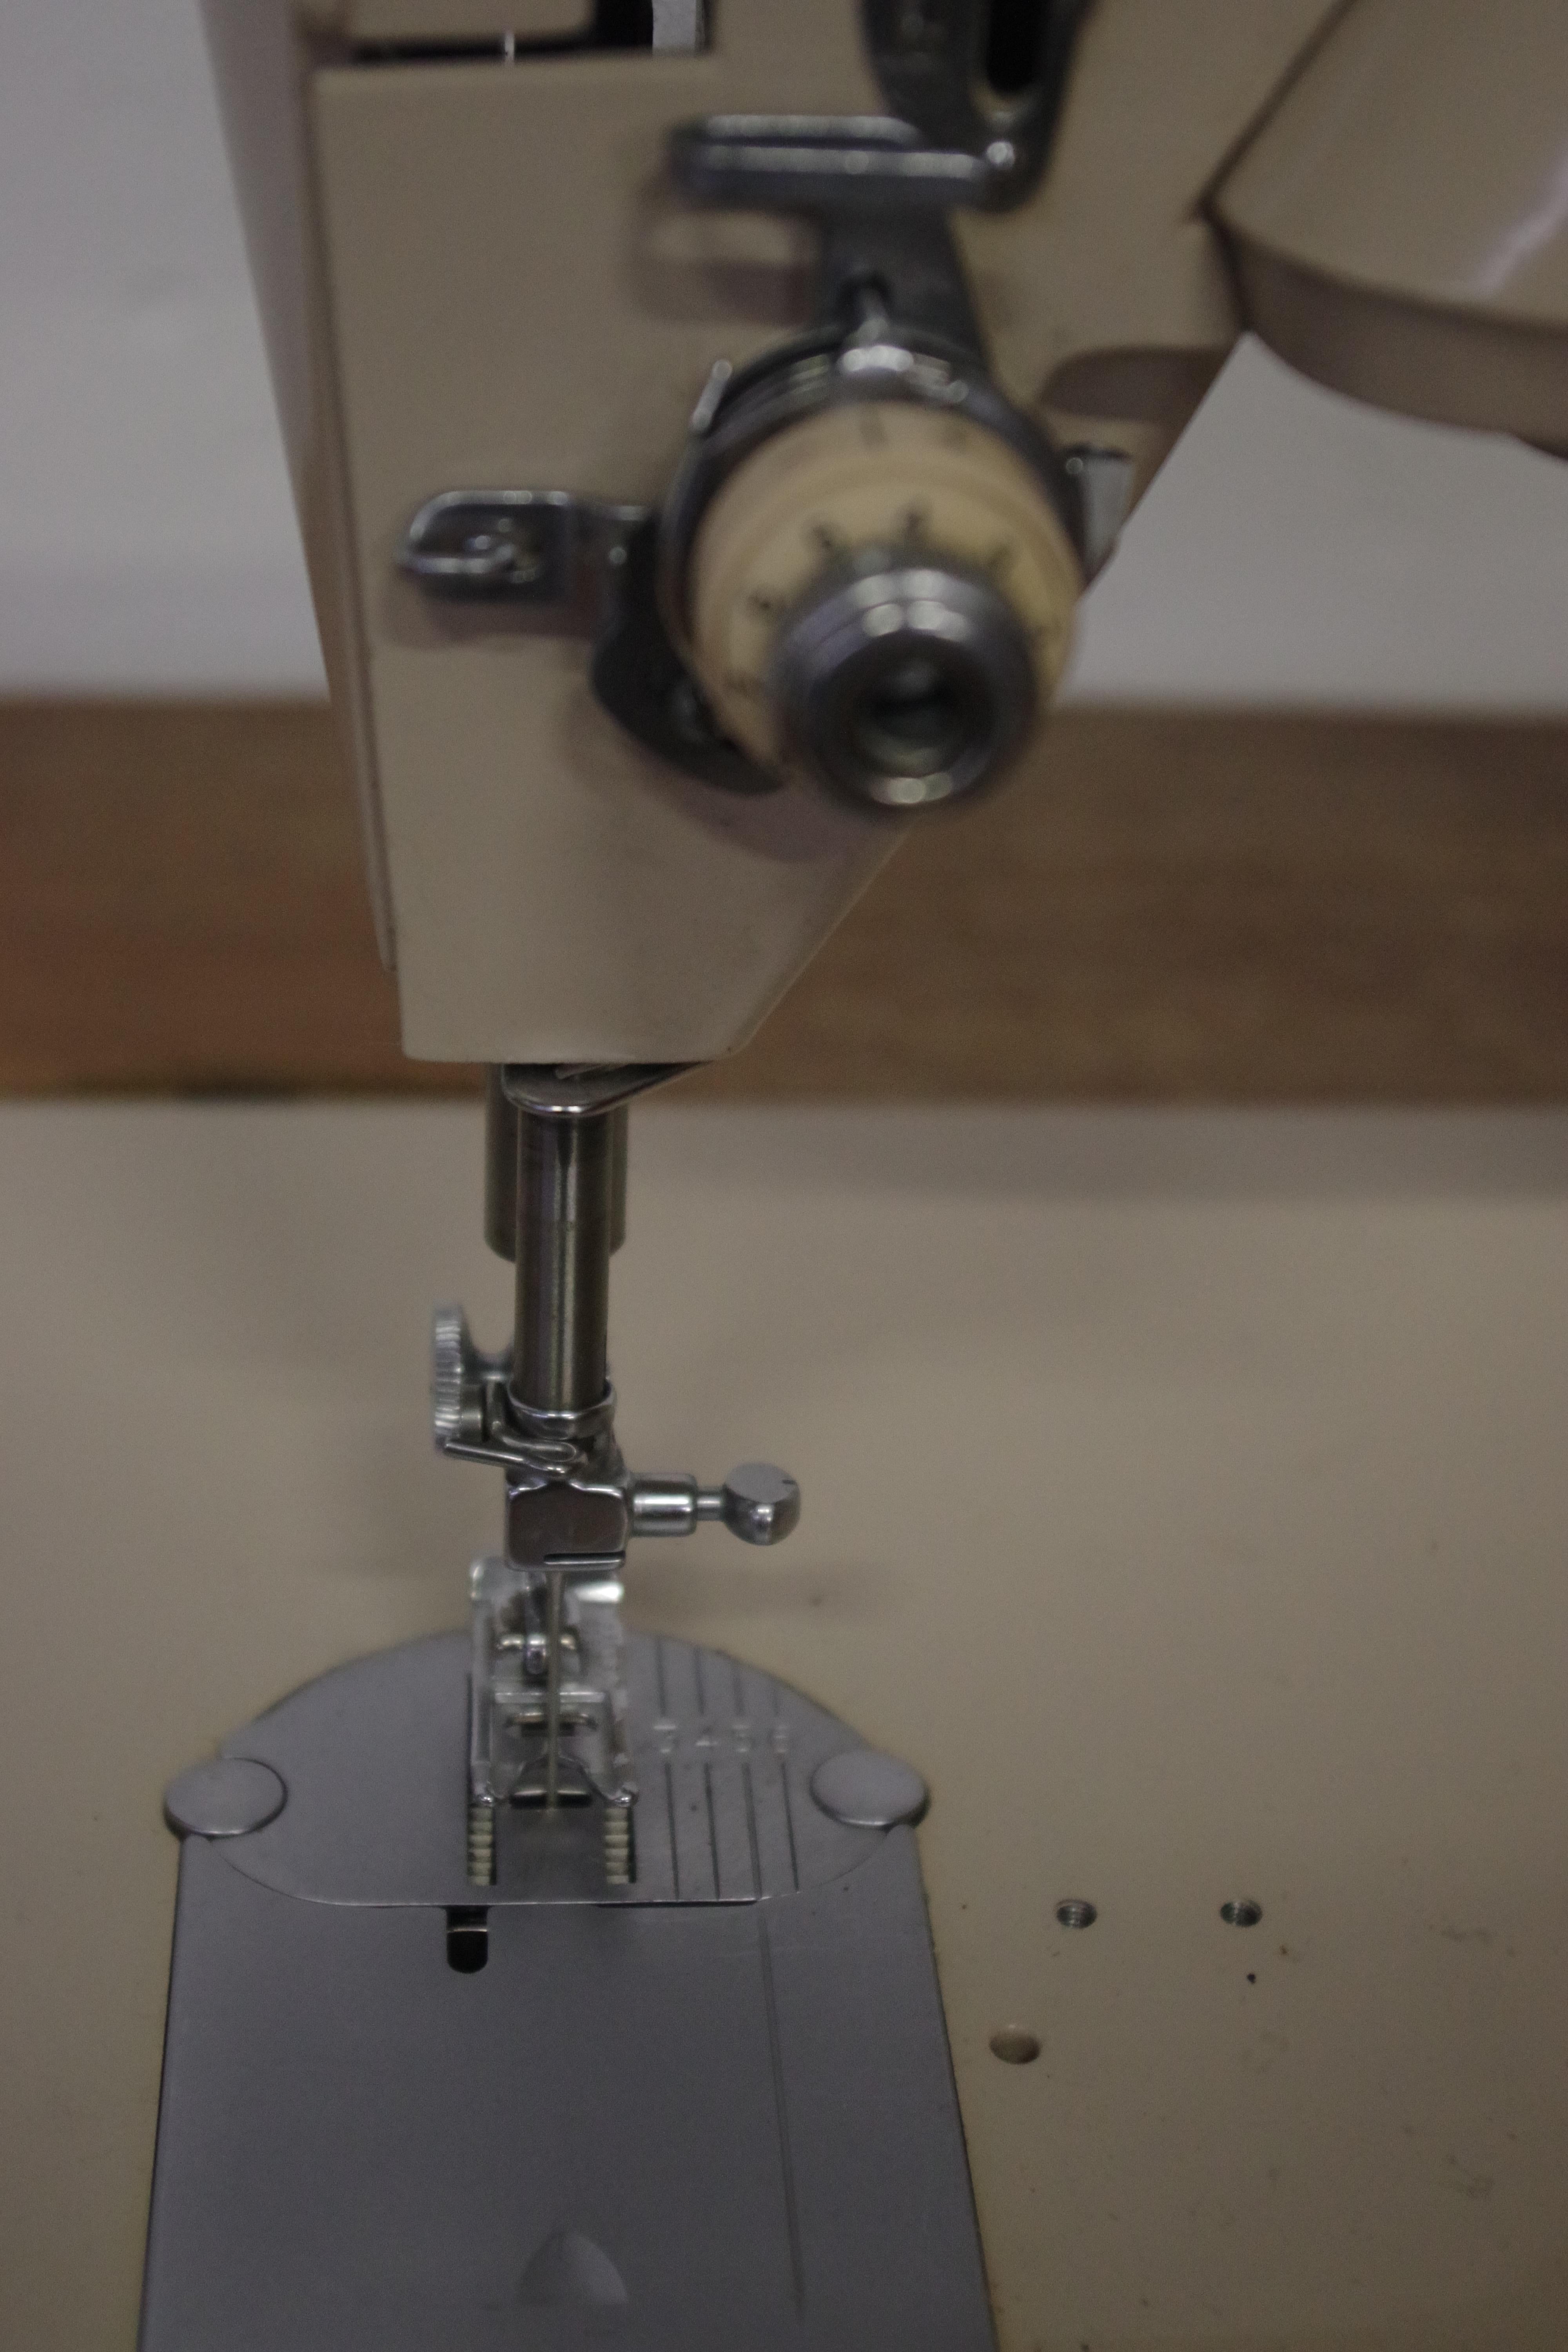 alco sewing machine